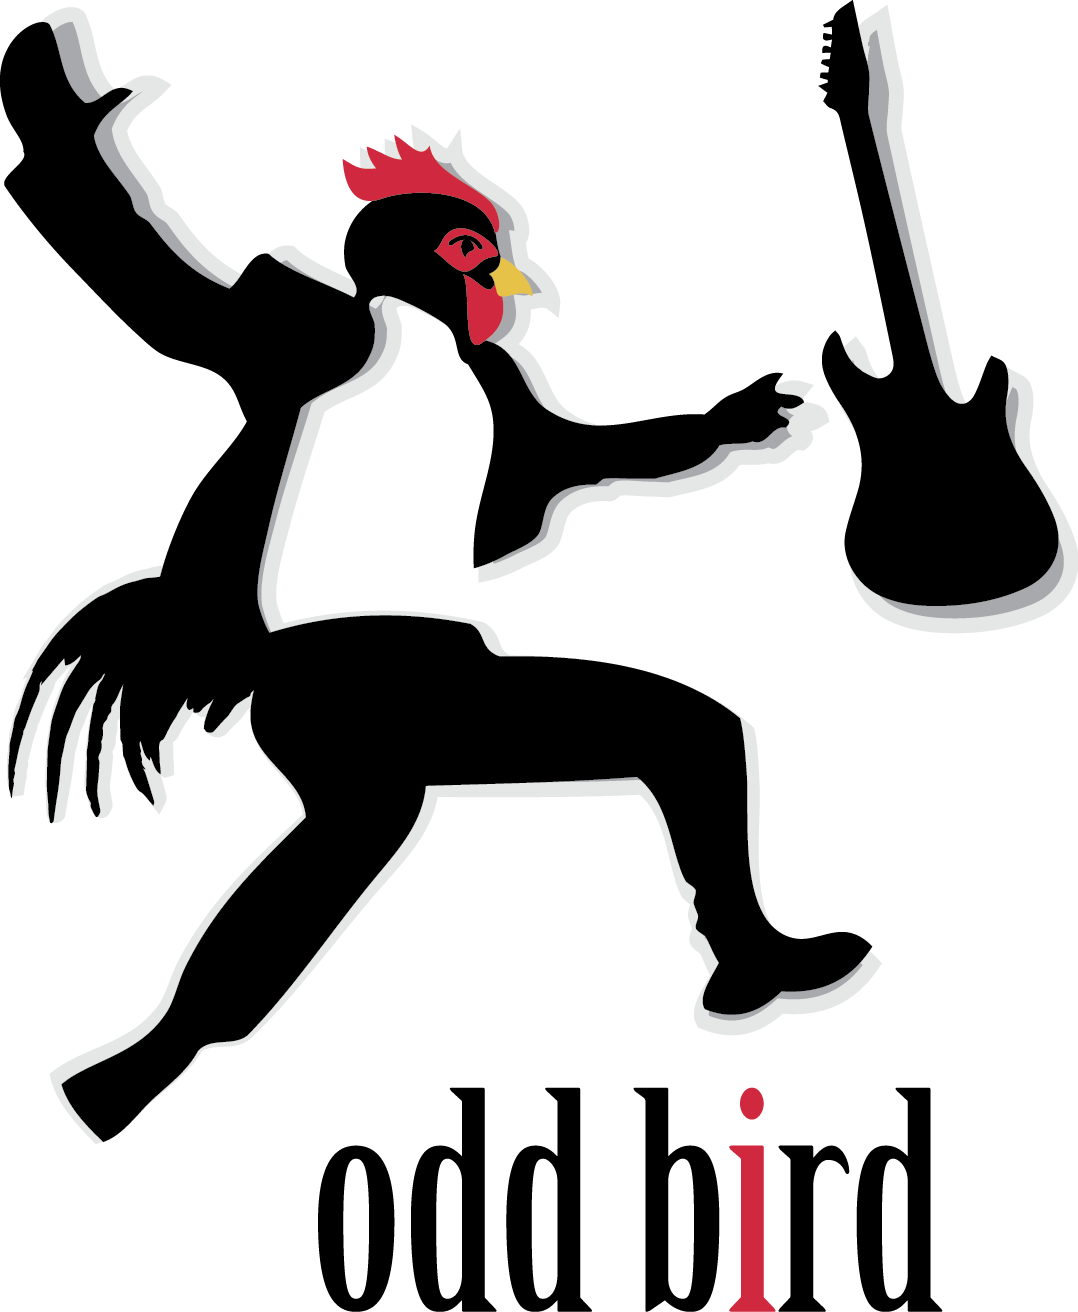 The Birds Band Logo - Odd Bird Blues Band Logo | My Portfolio | My portfolio, Logos, Band ...